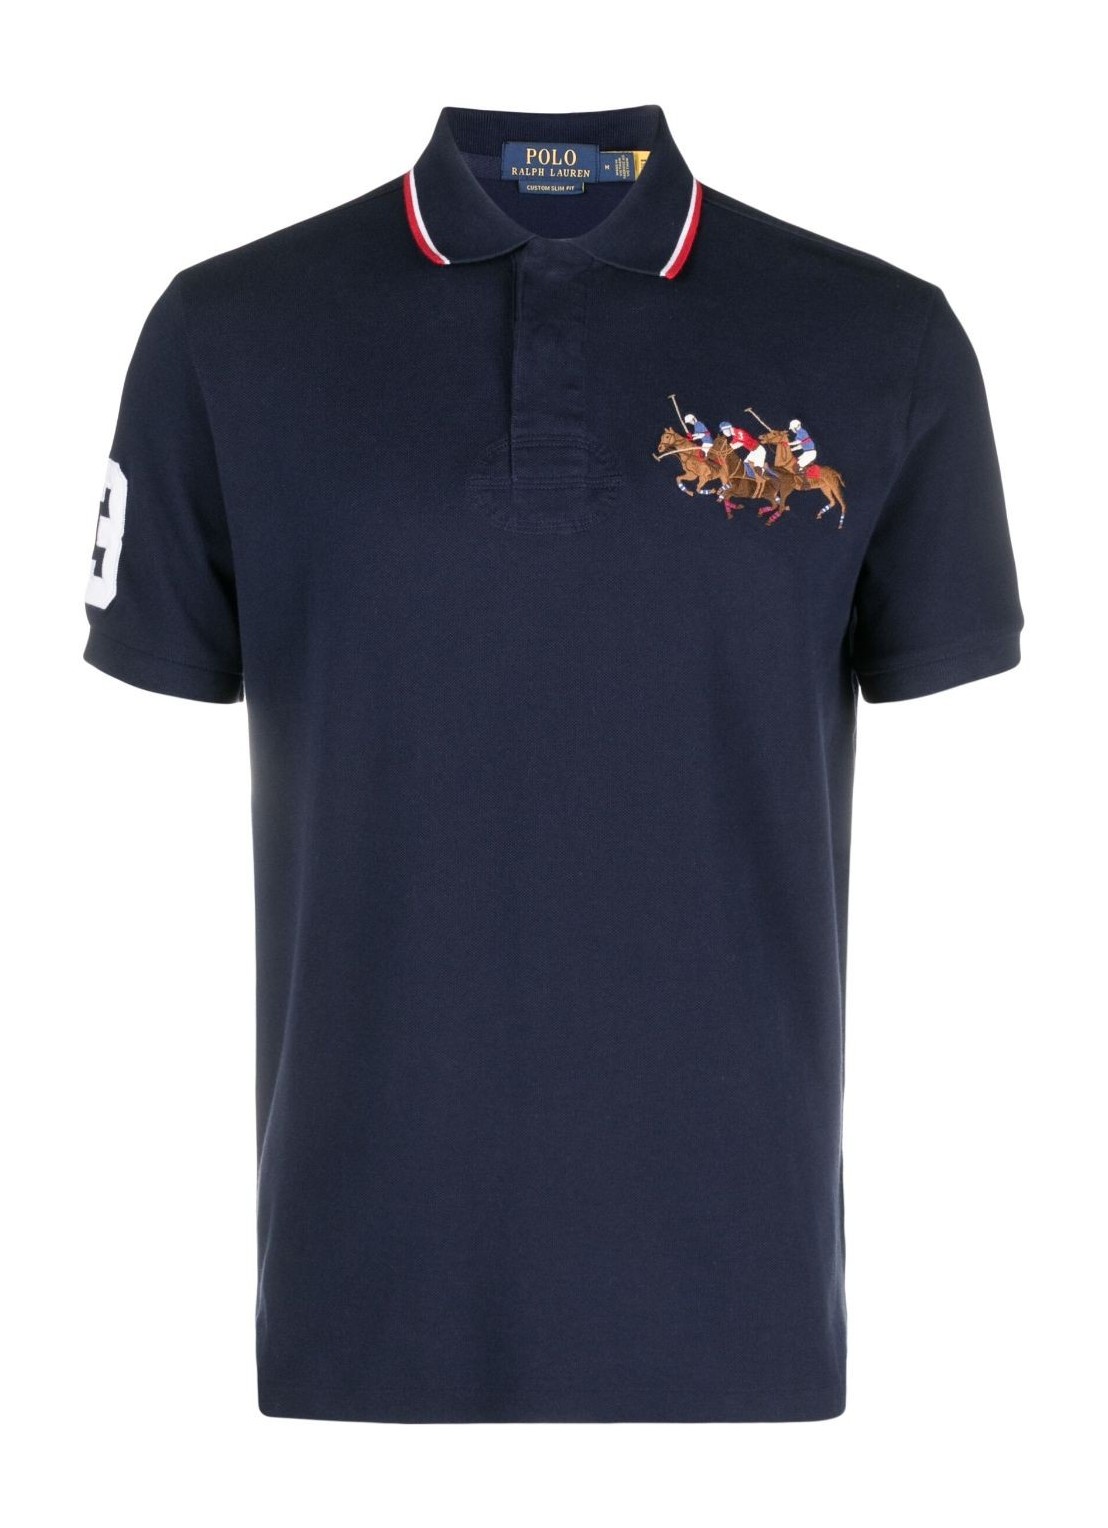 Polo polo ralph lauren polo man sskccmslm11-short sleeve-polo shirt 710900614006 cruise navy talla L